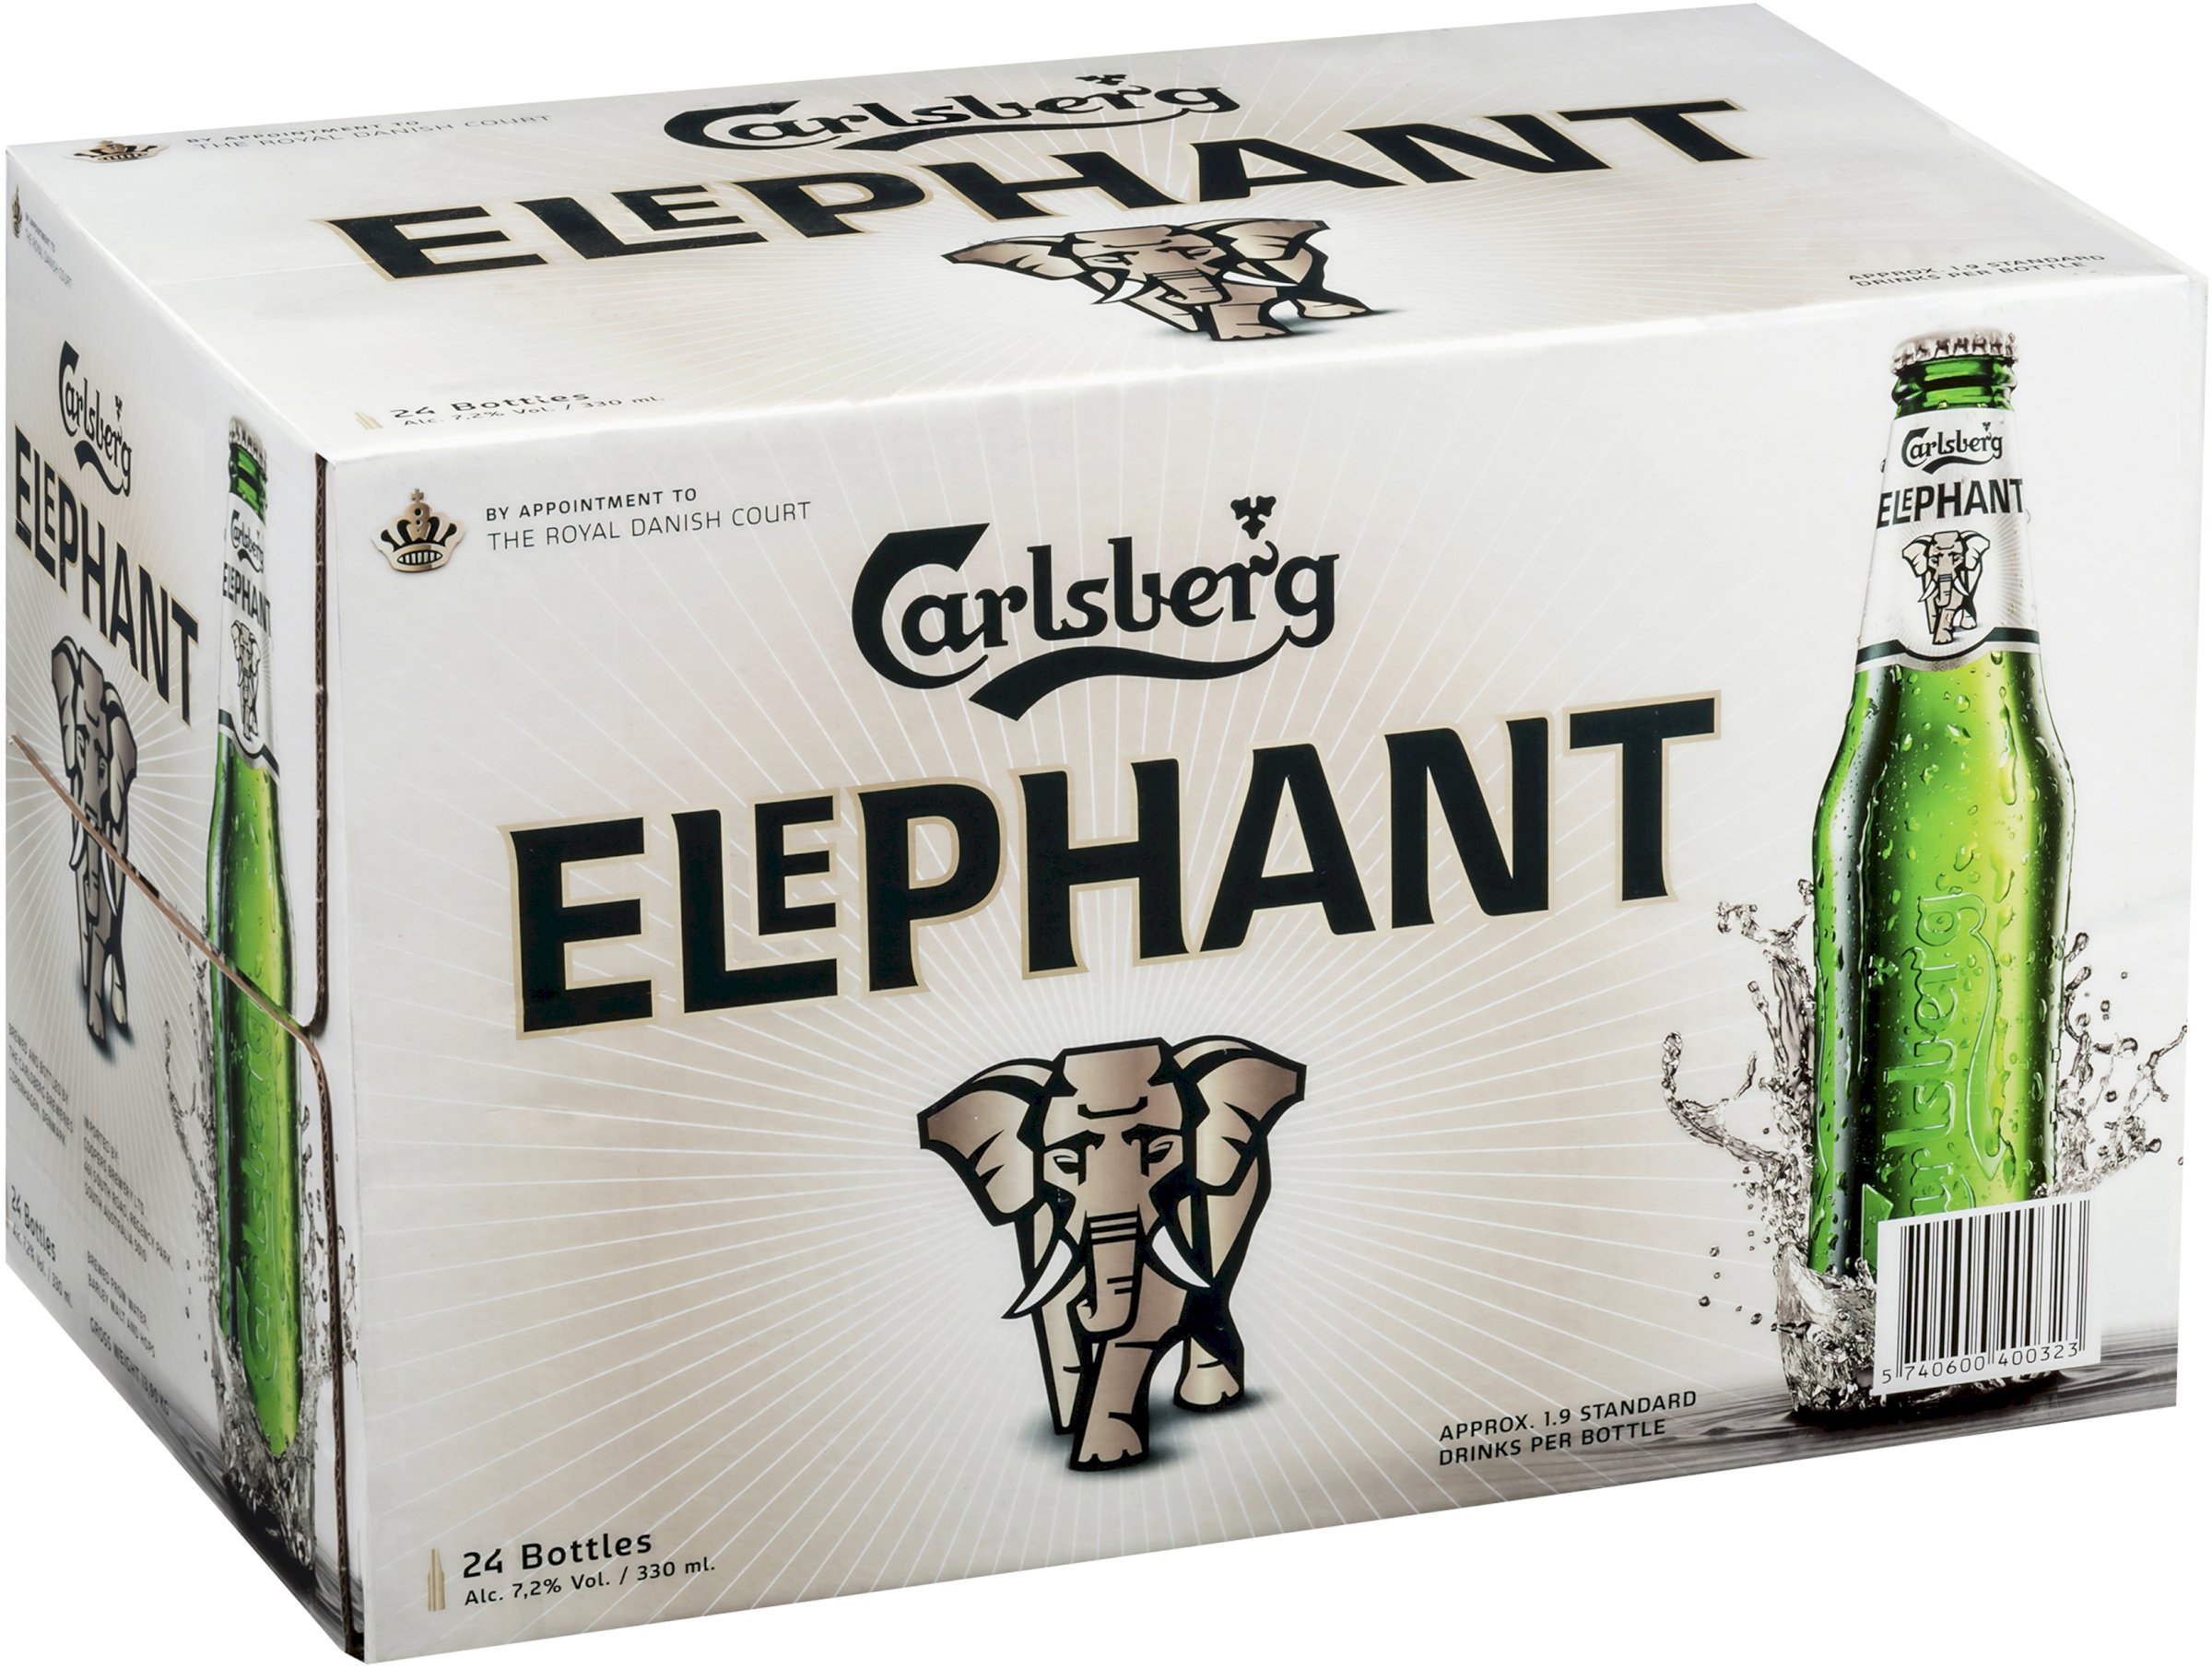 Carlsberg Elephant Beer Alcohol Percentage - 7% ABV